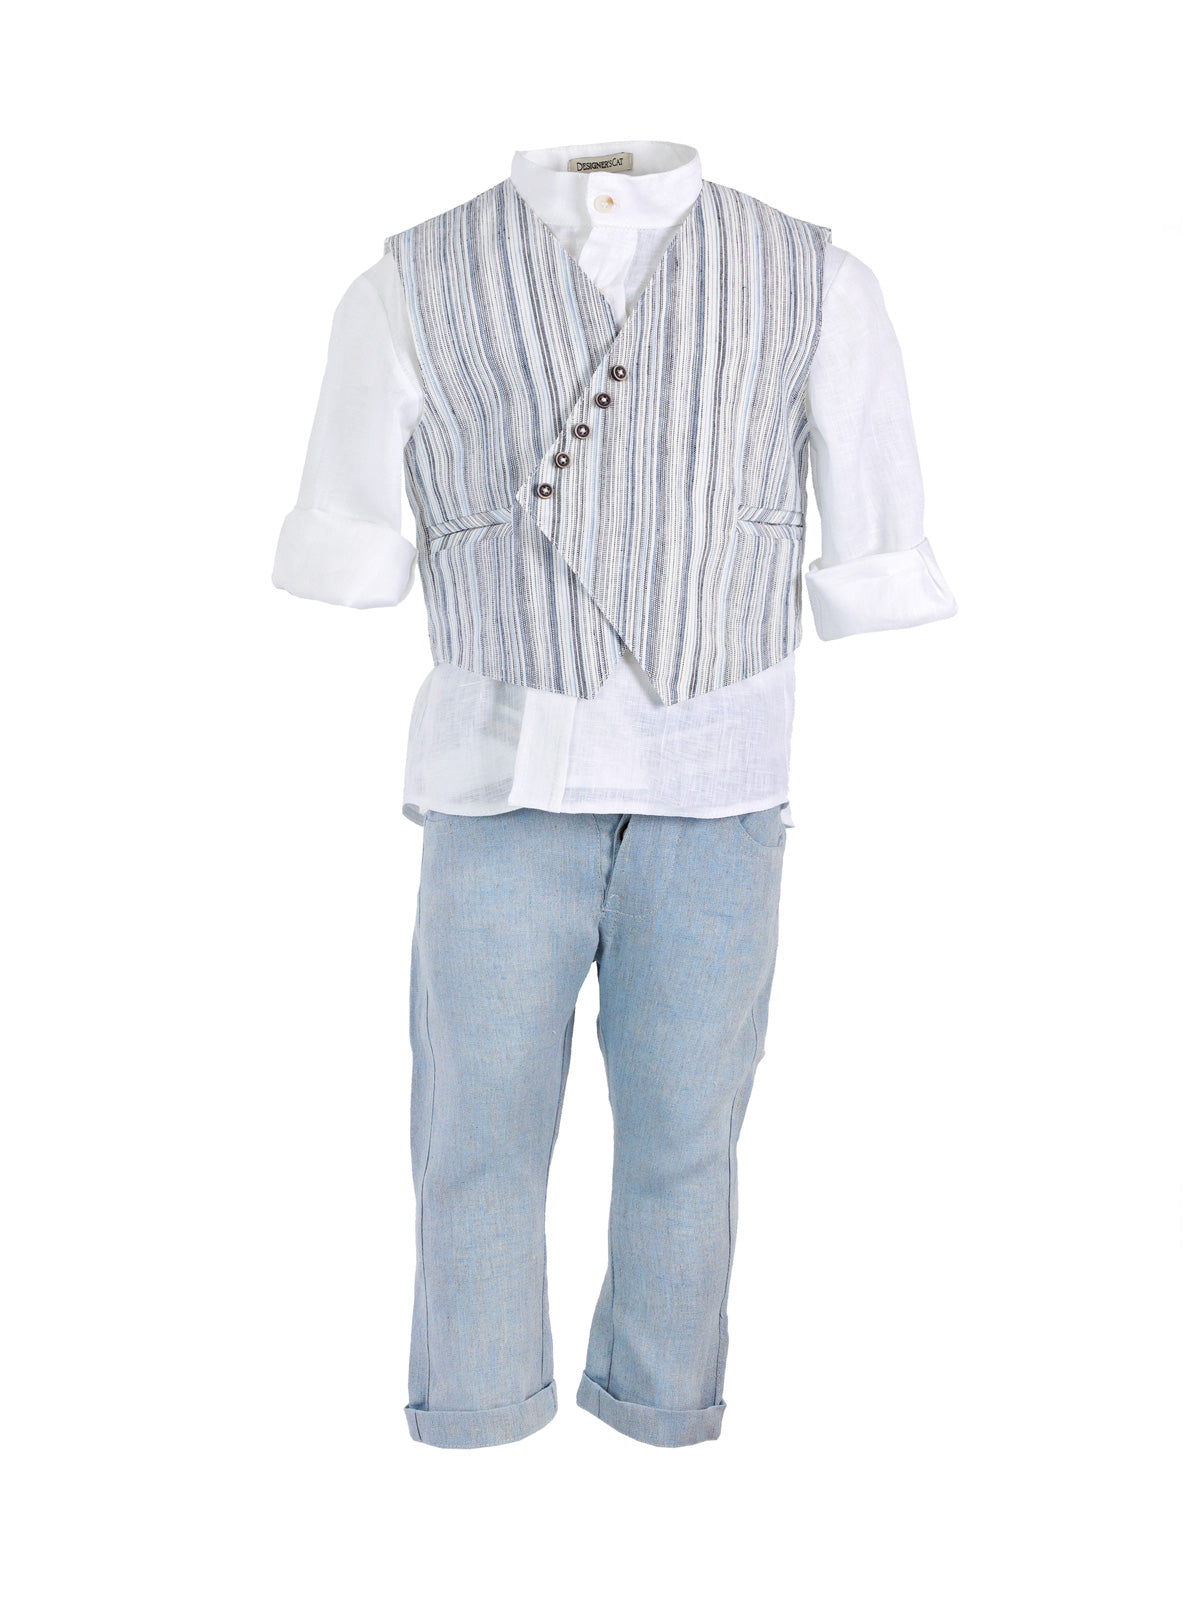 Boy's Linen Baptism outfit set 5pcs - AVELINO